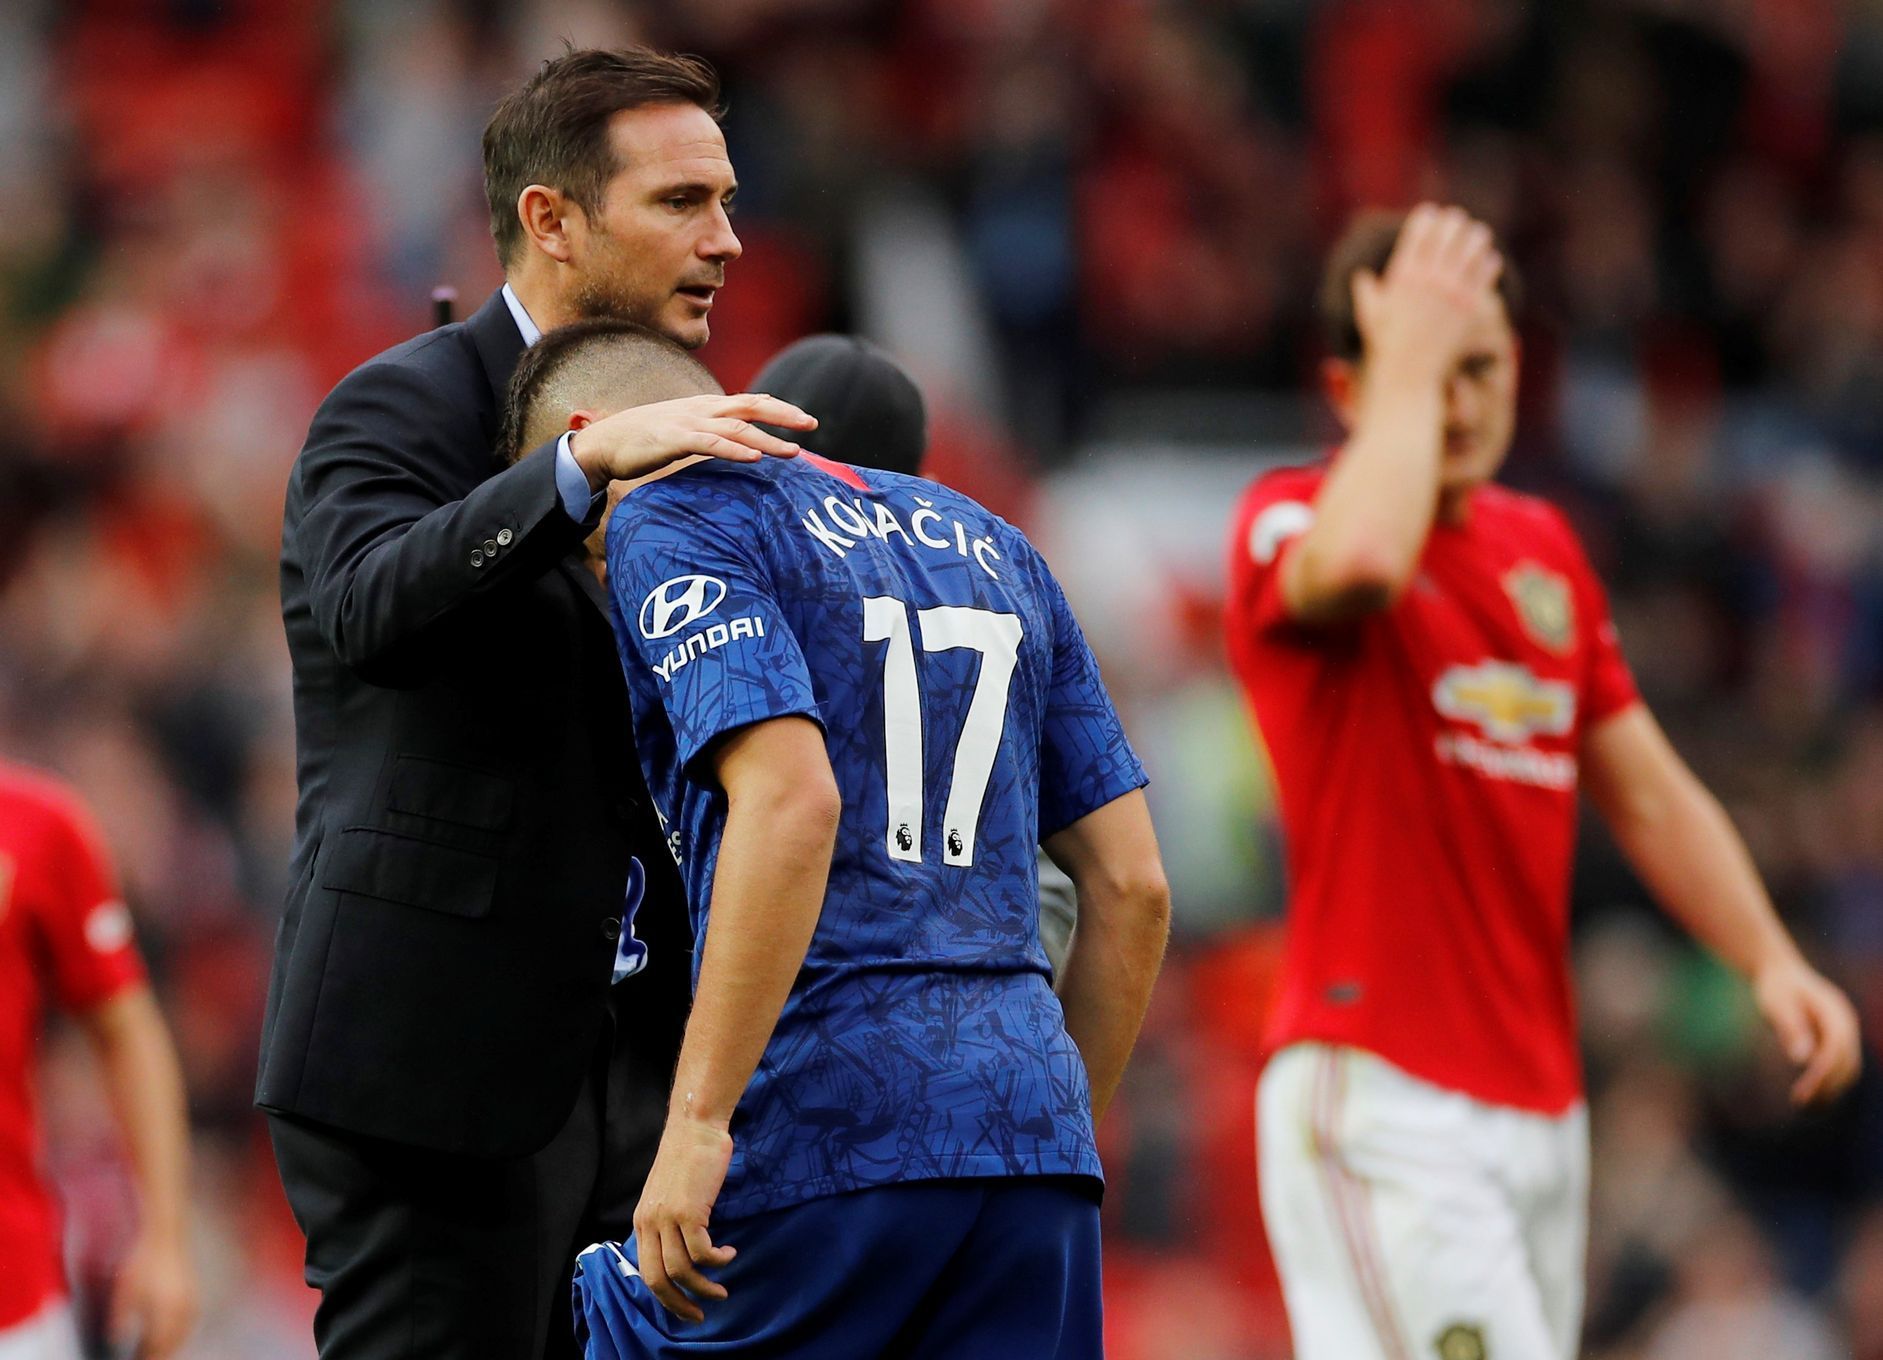 Nový kouč Chelsea Frank Lampard utěšuje po debaklu od Manchesteru United Matea Kovačiče